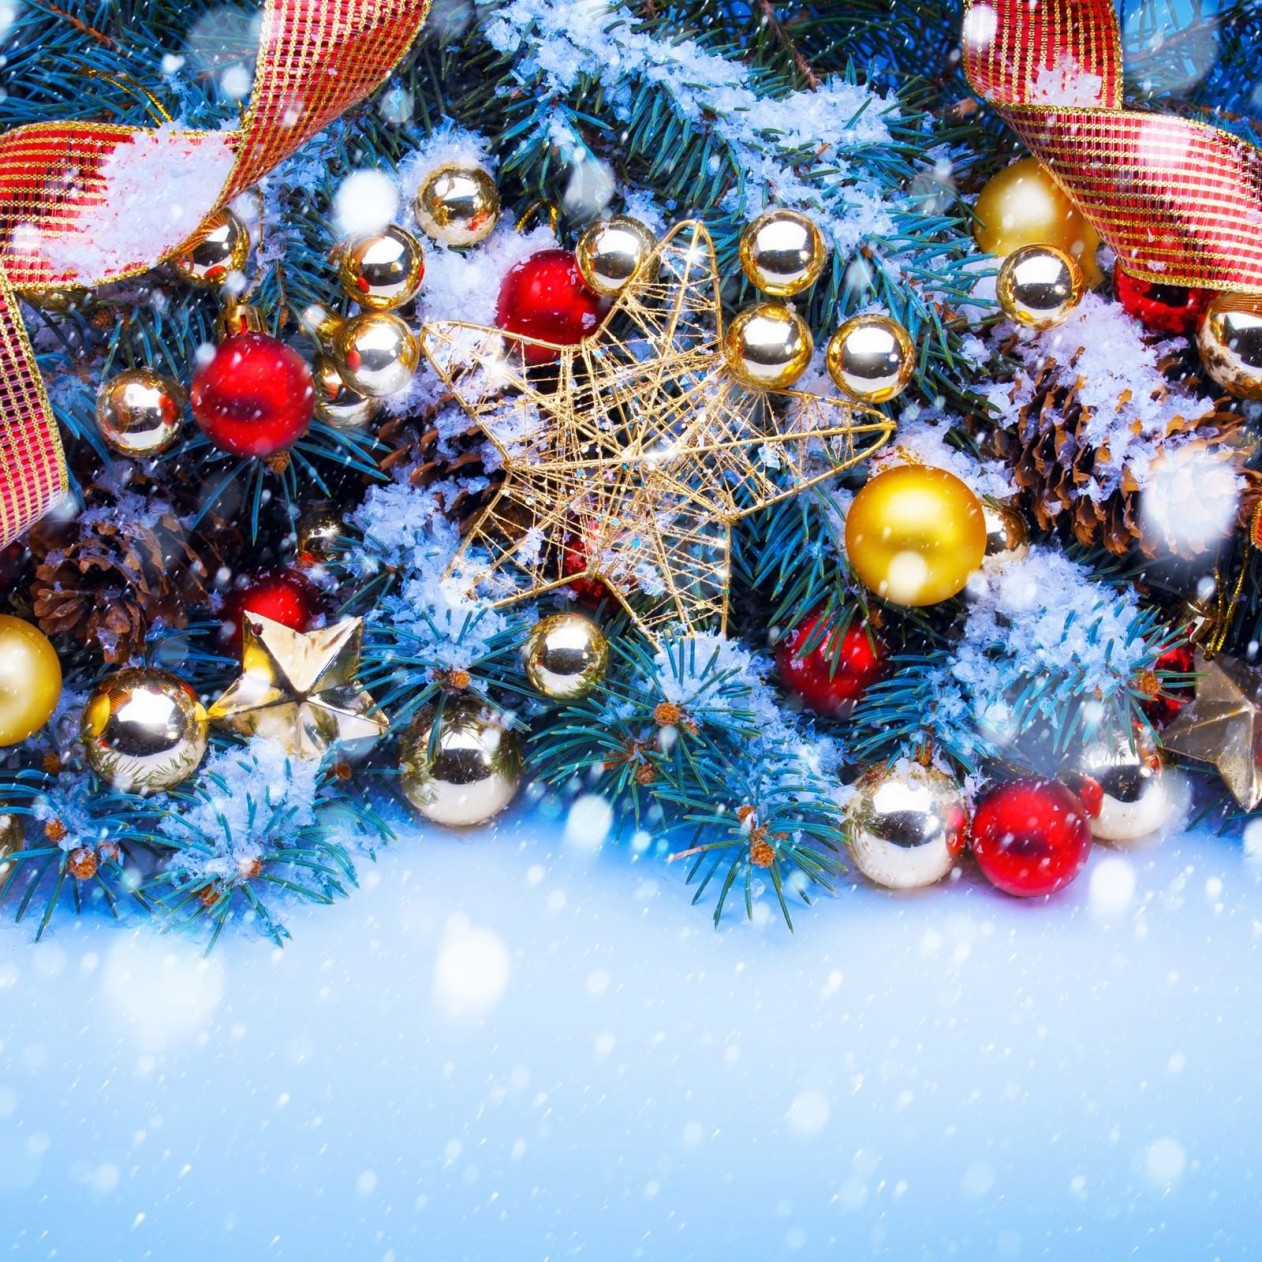 Shining Stars Christmas Ornaments and Decorations Wallpaper for Apple iPad mini